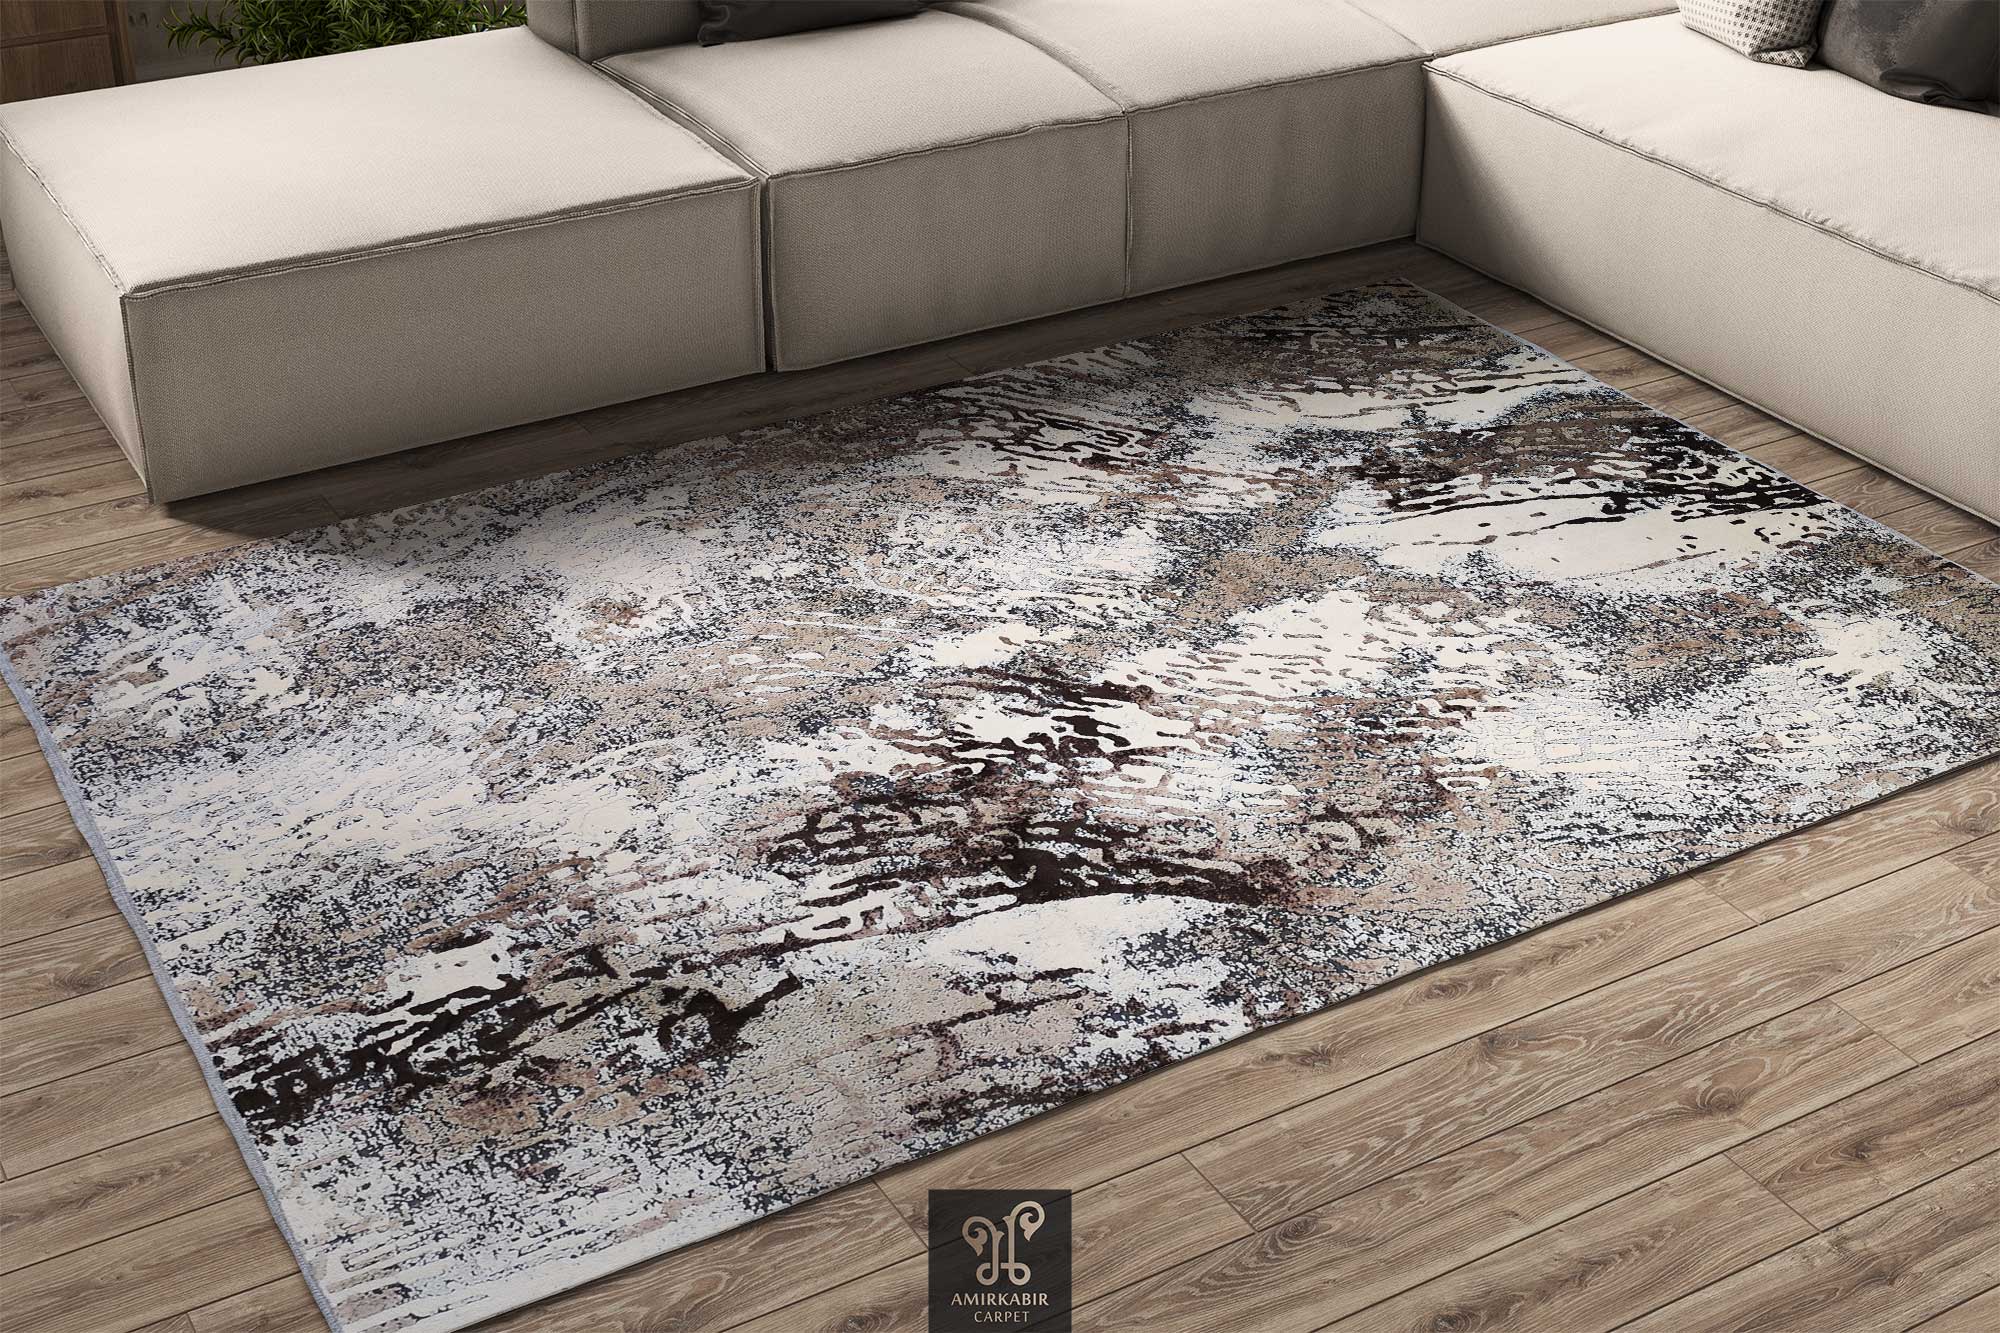 Vintage 400 reeds carpet -1400 Density RUG - Modern Carpet - Harmony Carpet 11111